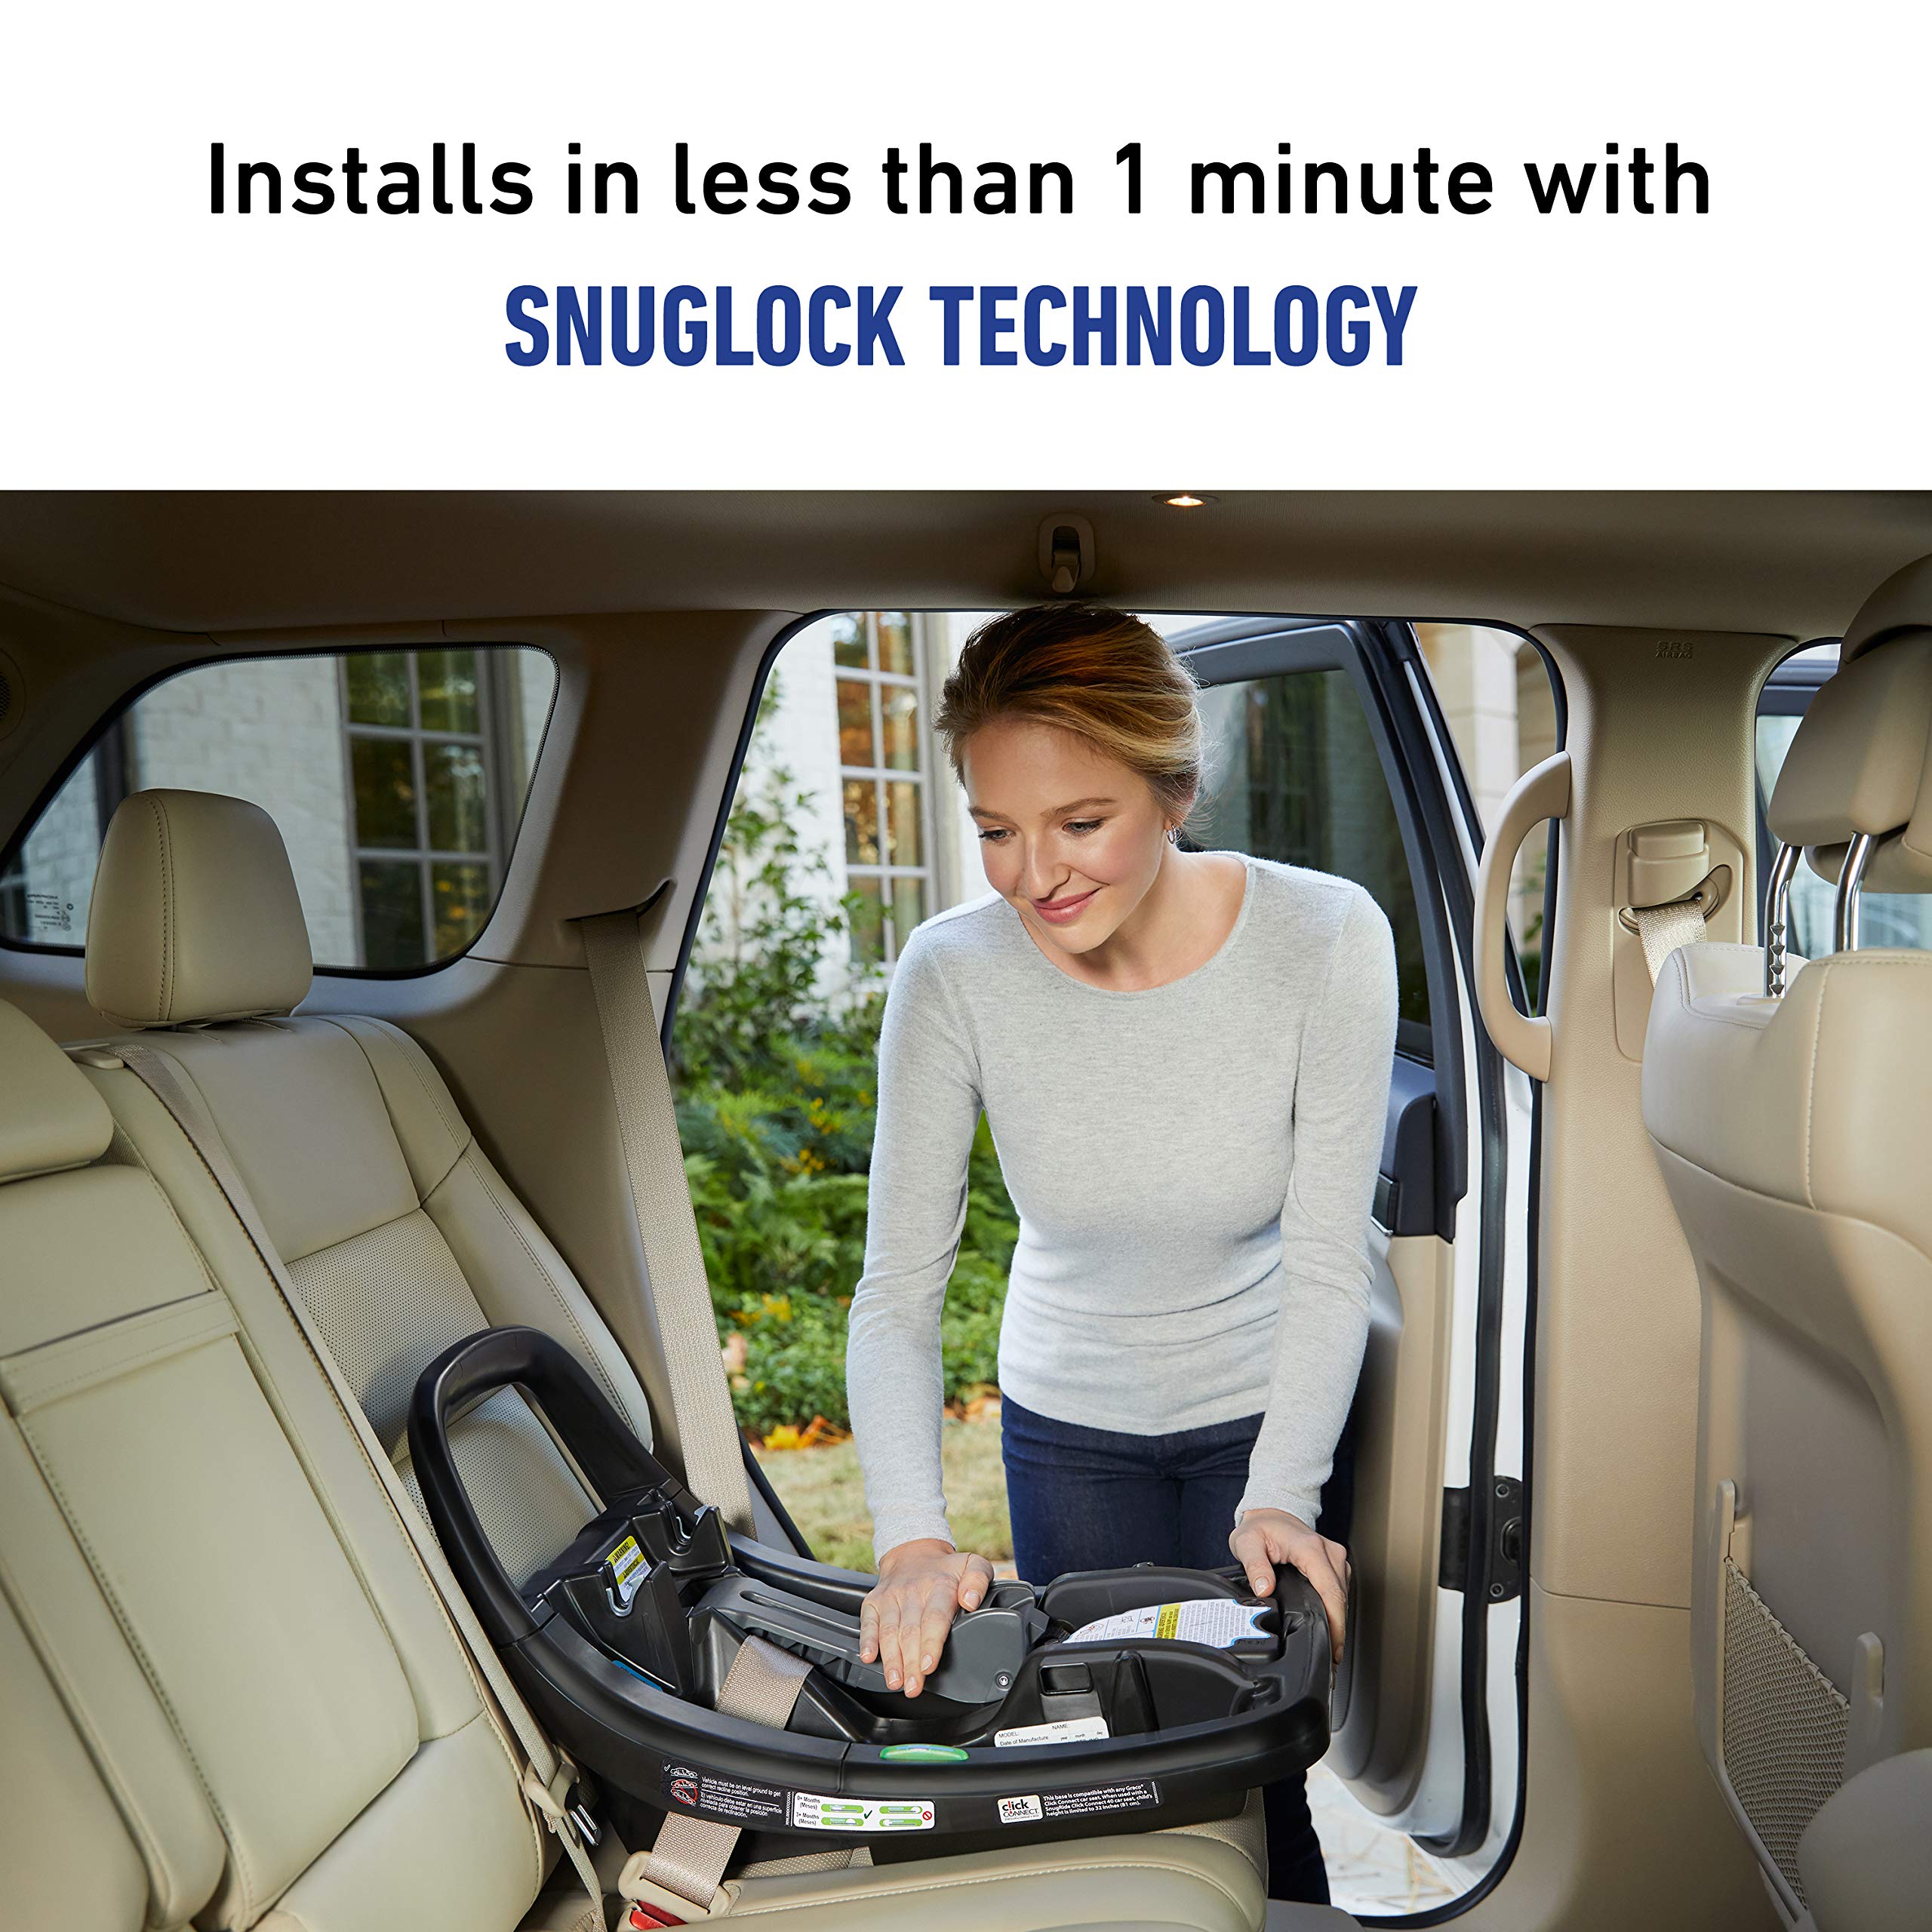 Graco SnugFit 35 LX Infant Car Seat | Baby Car Seat with Anti Rebound Bar, Pierce